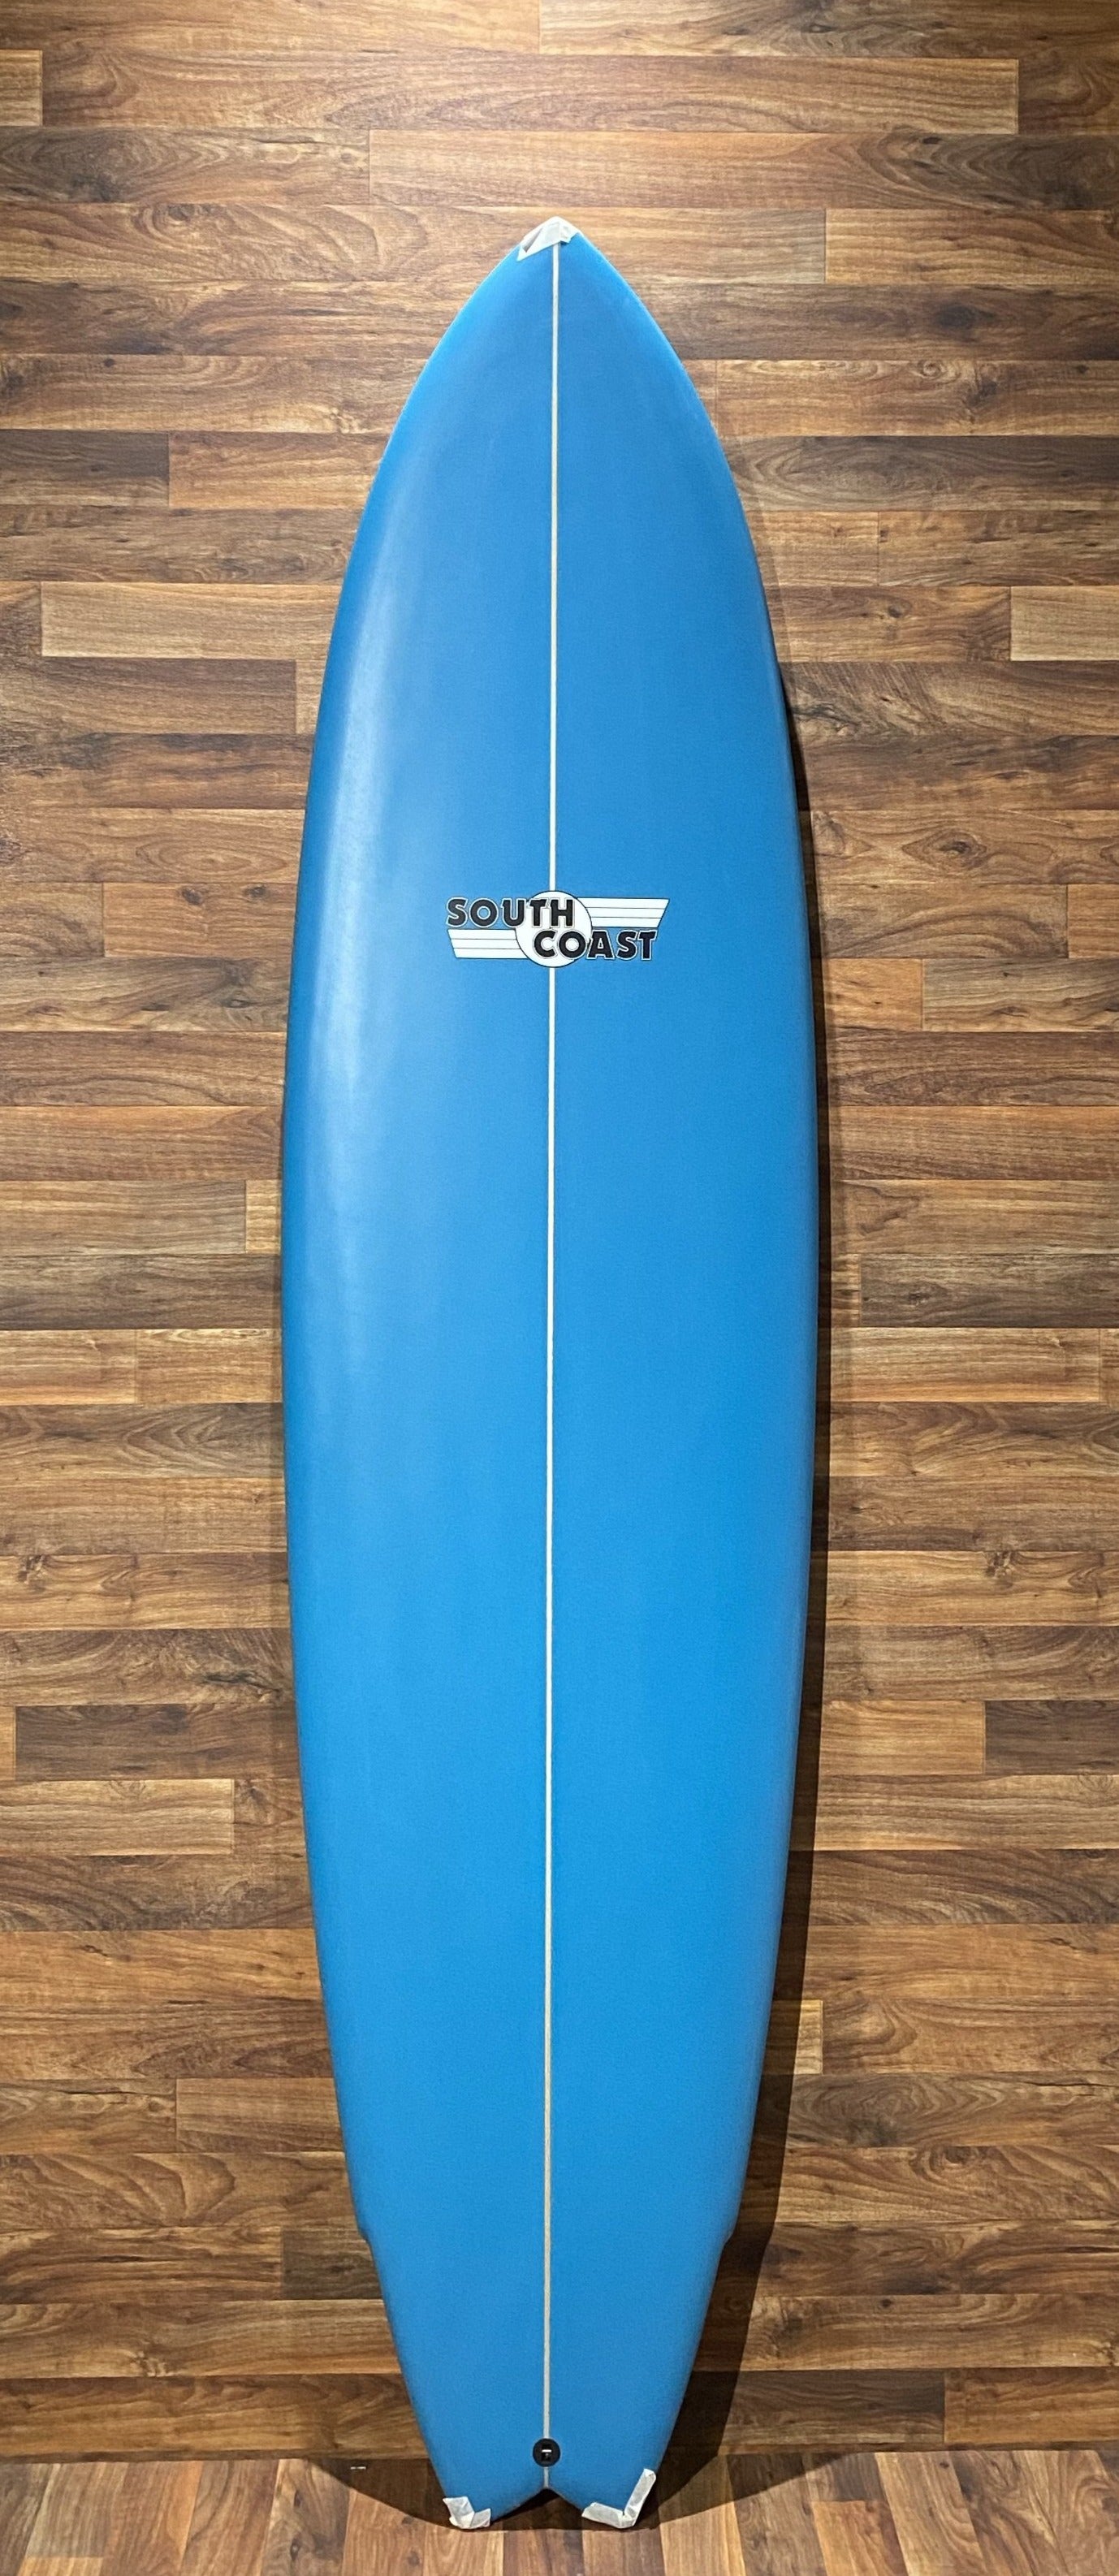 SOUTH COAST SWEGG SURFBOARD 7'6"